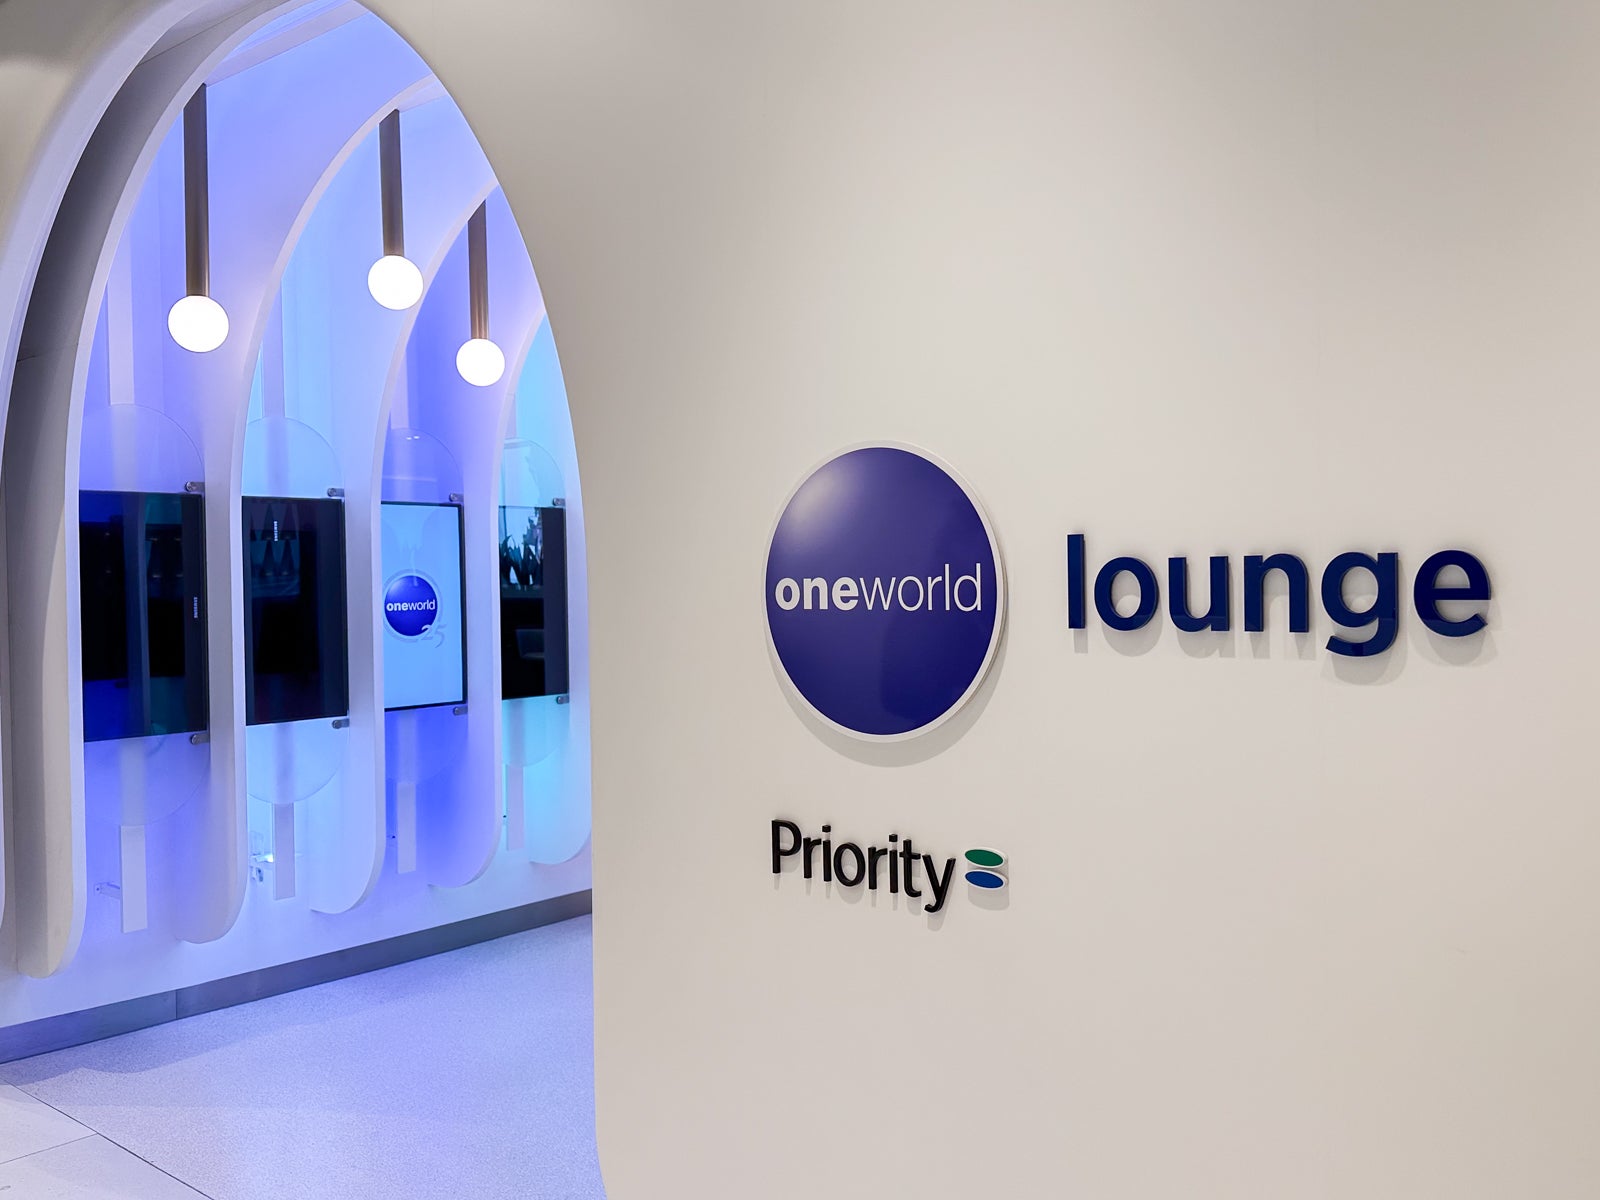 oneworld lounge priority entrance